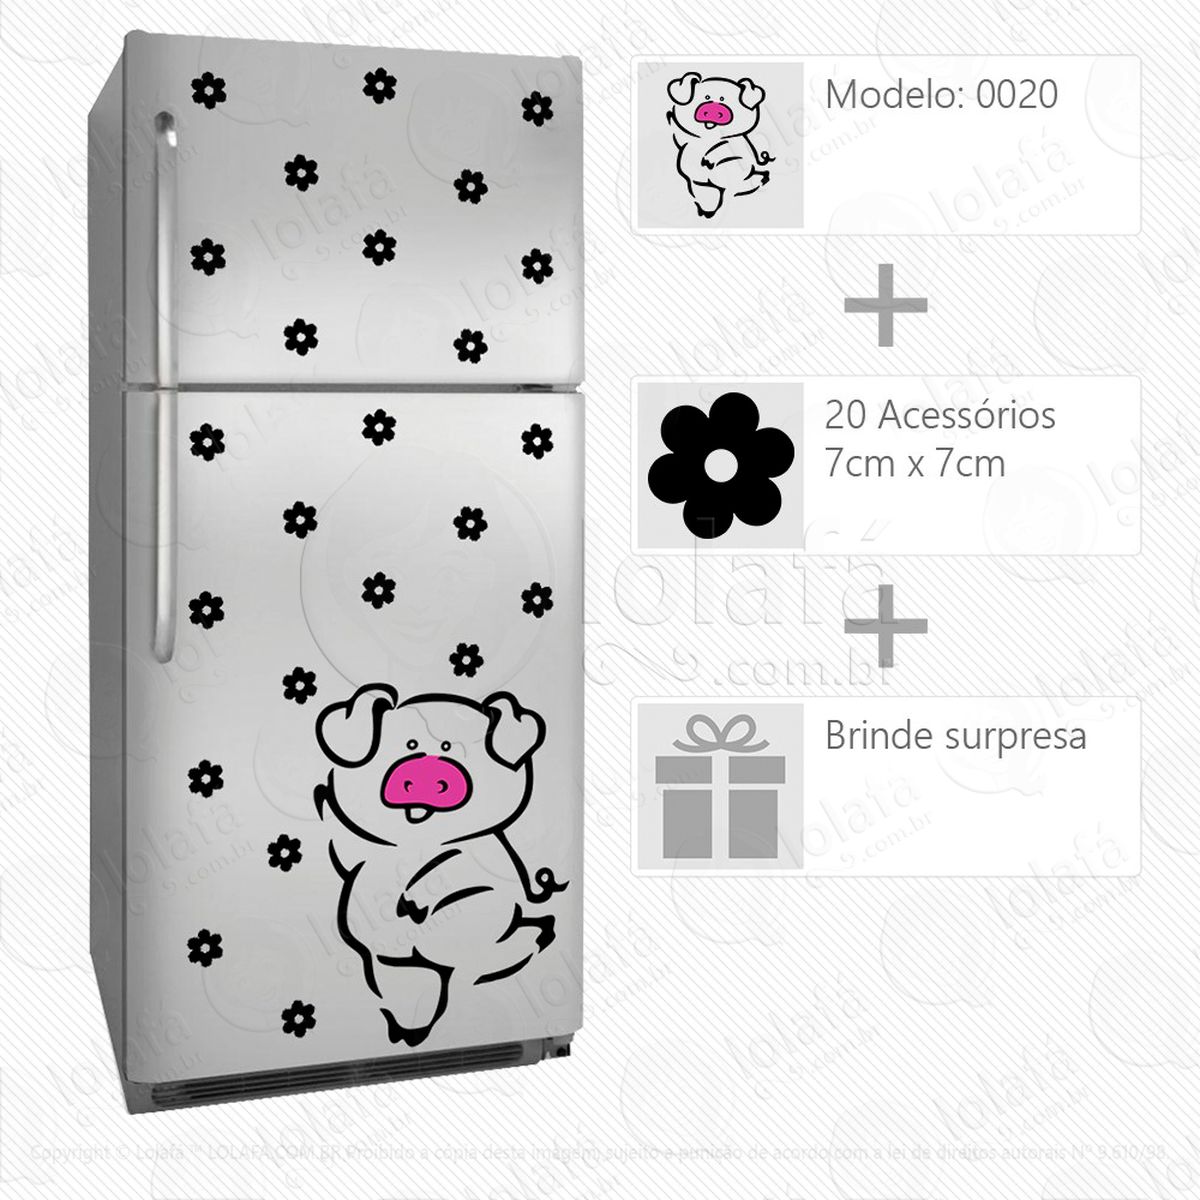 porco adesivo para geladeira e frigobar - mod:20